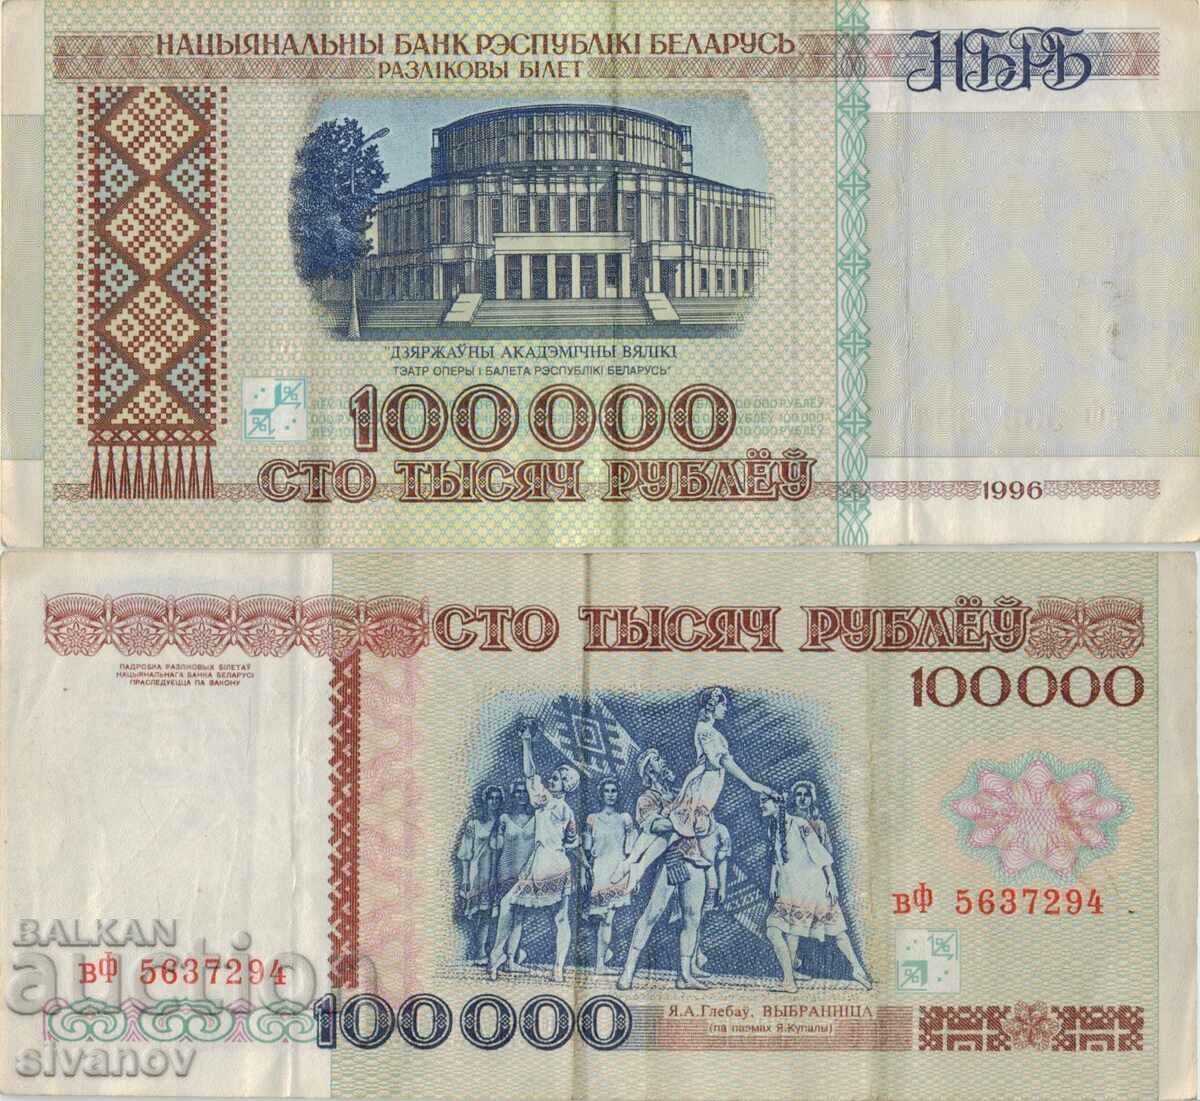 Belarus 100,000 rubles 1996 banknote #5132